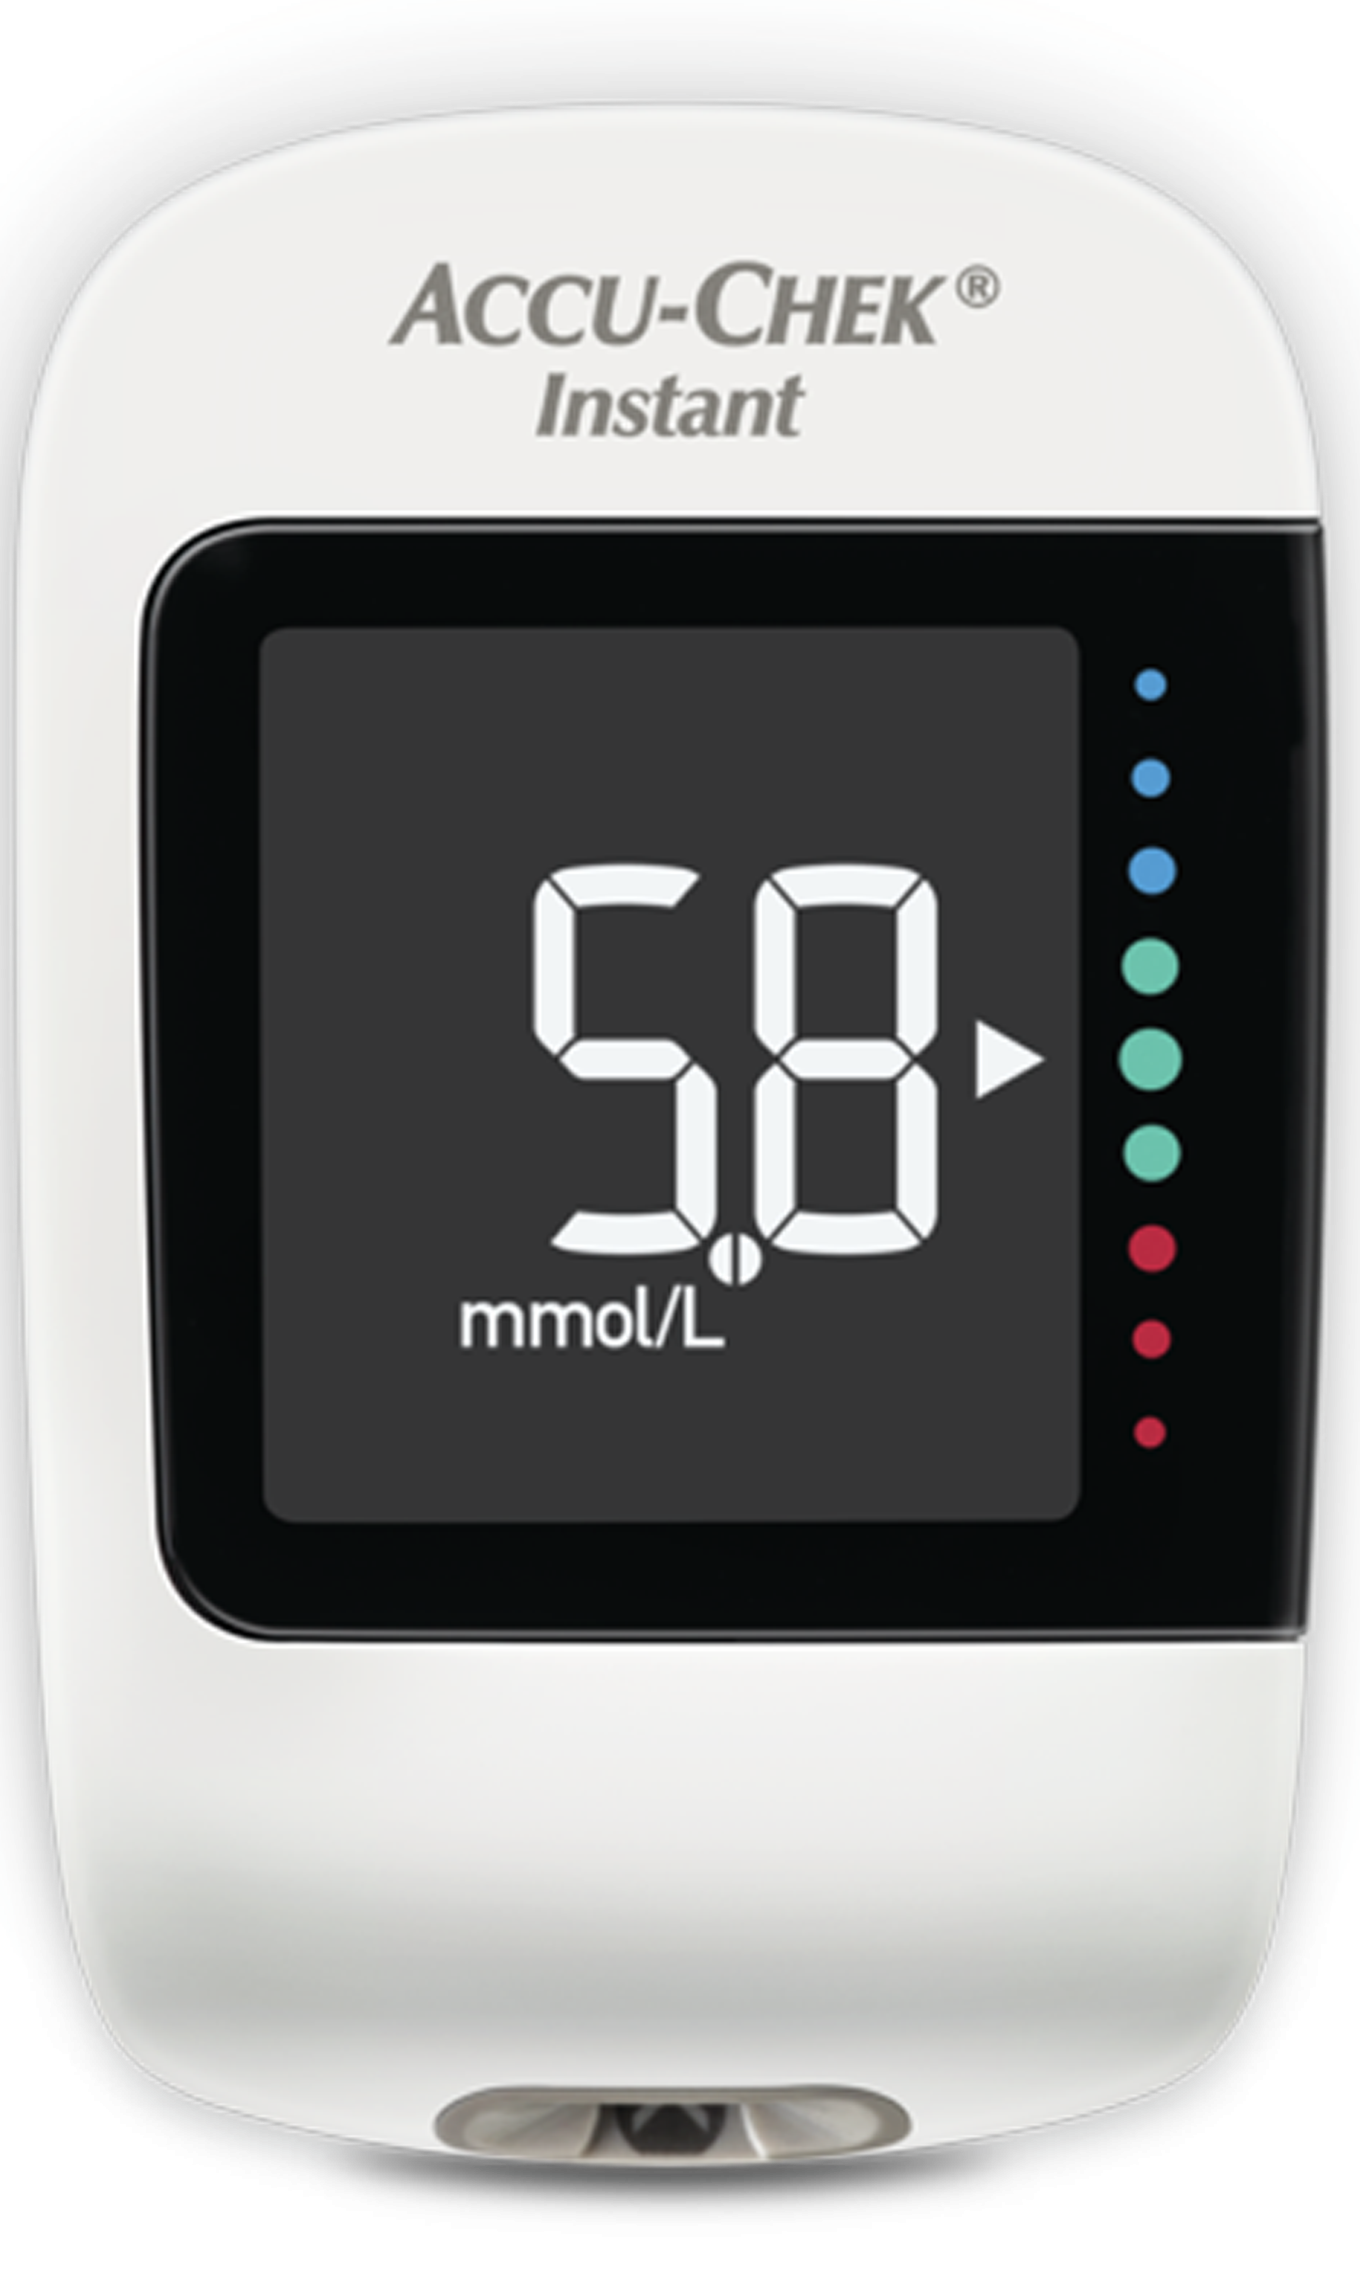 Accu-Chek Instant blood glucose meter